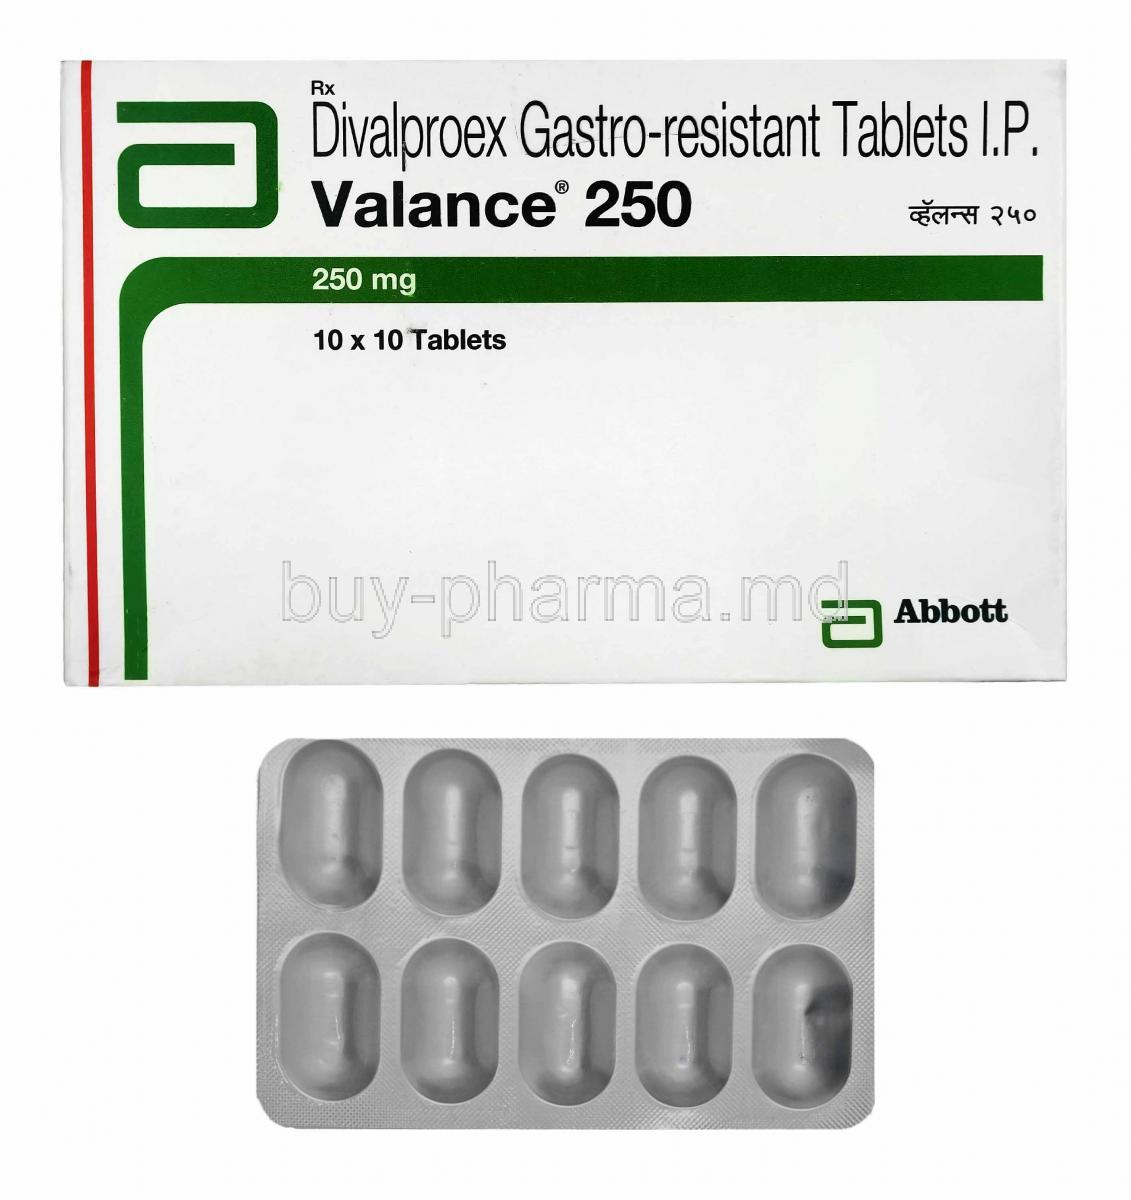 Valance, Divalproex 250mg box and tablets